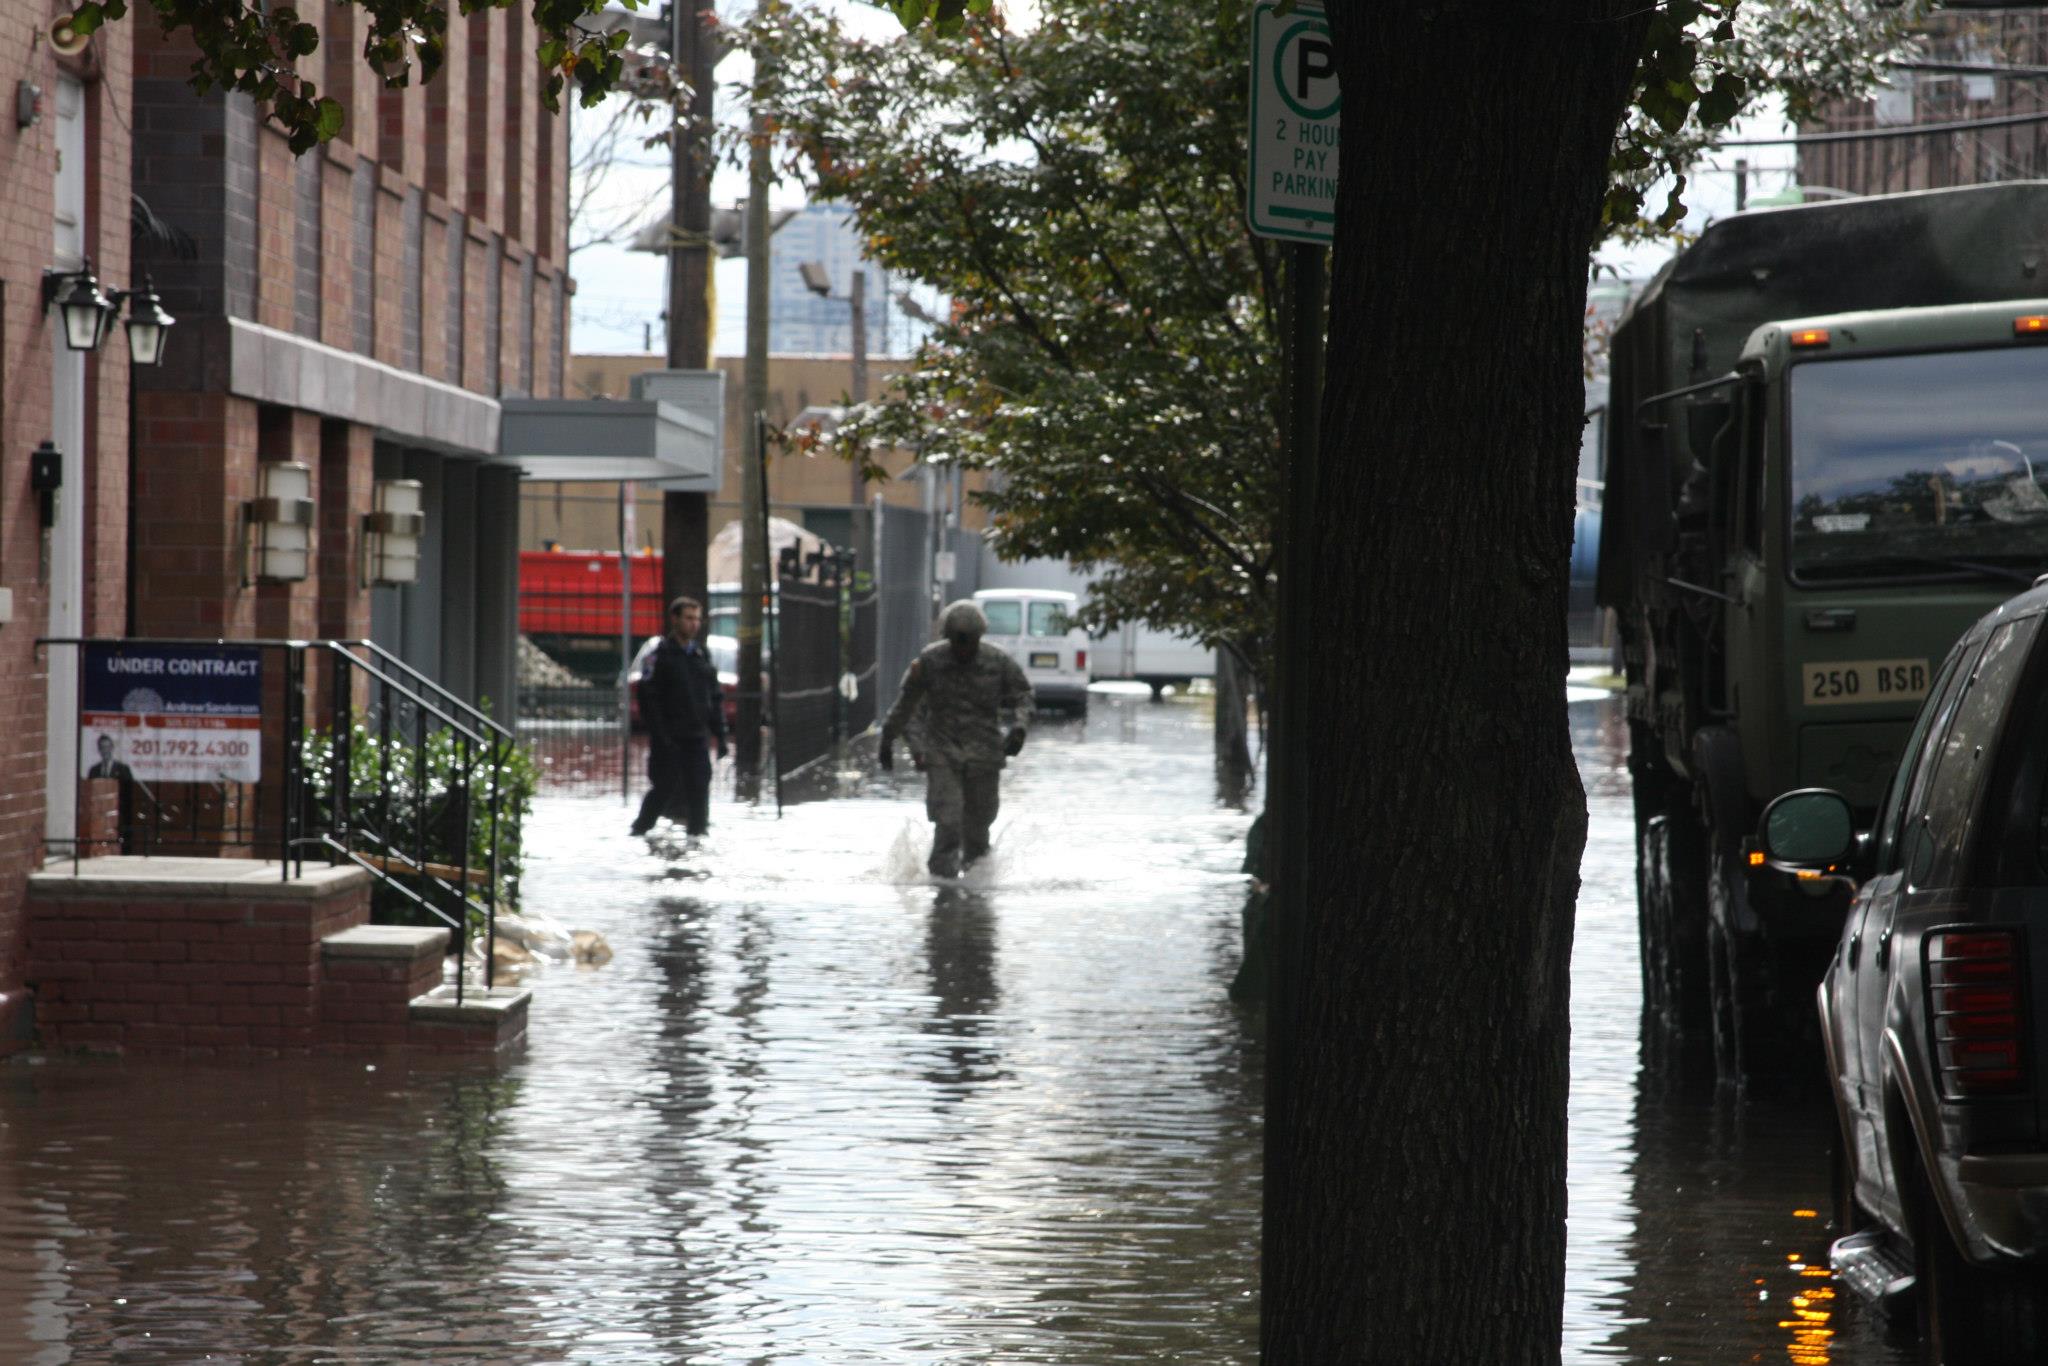 NJ_National_Guard_in_Hoboken_during_Hurricane_Sandy